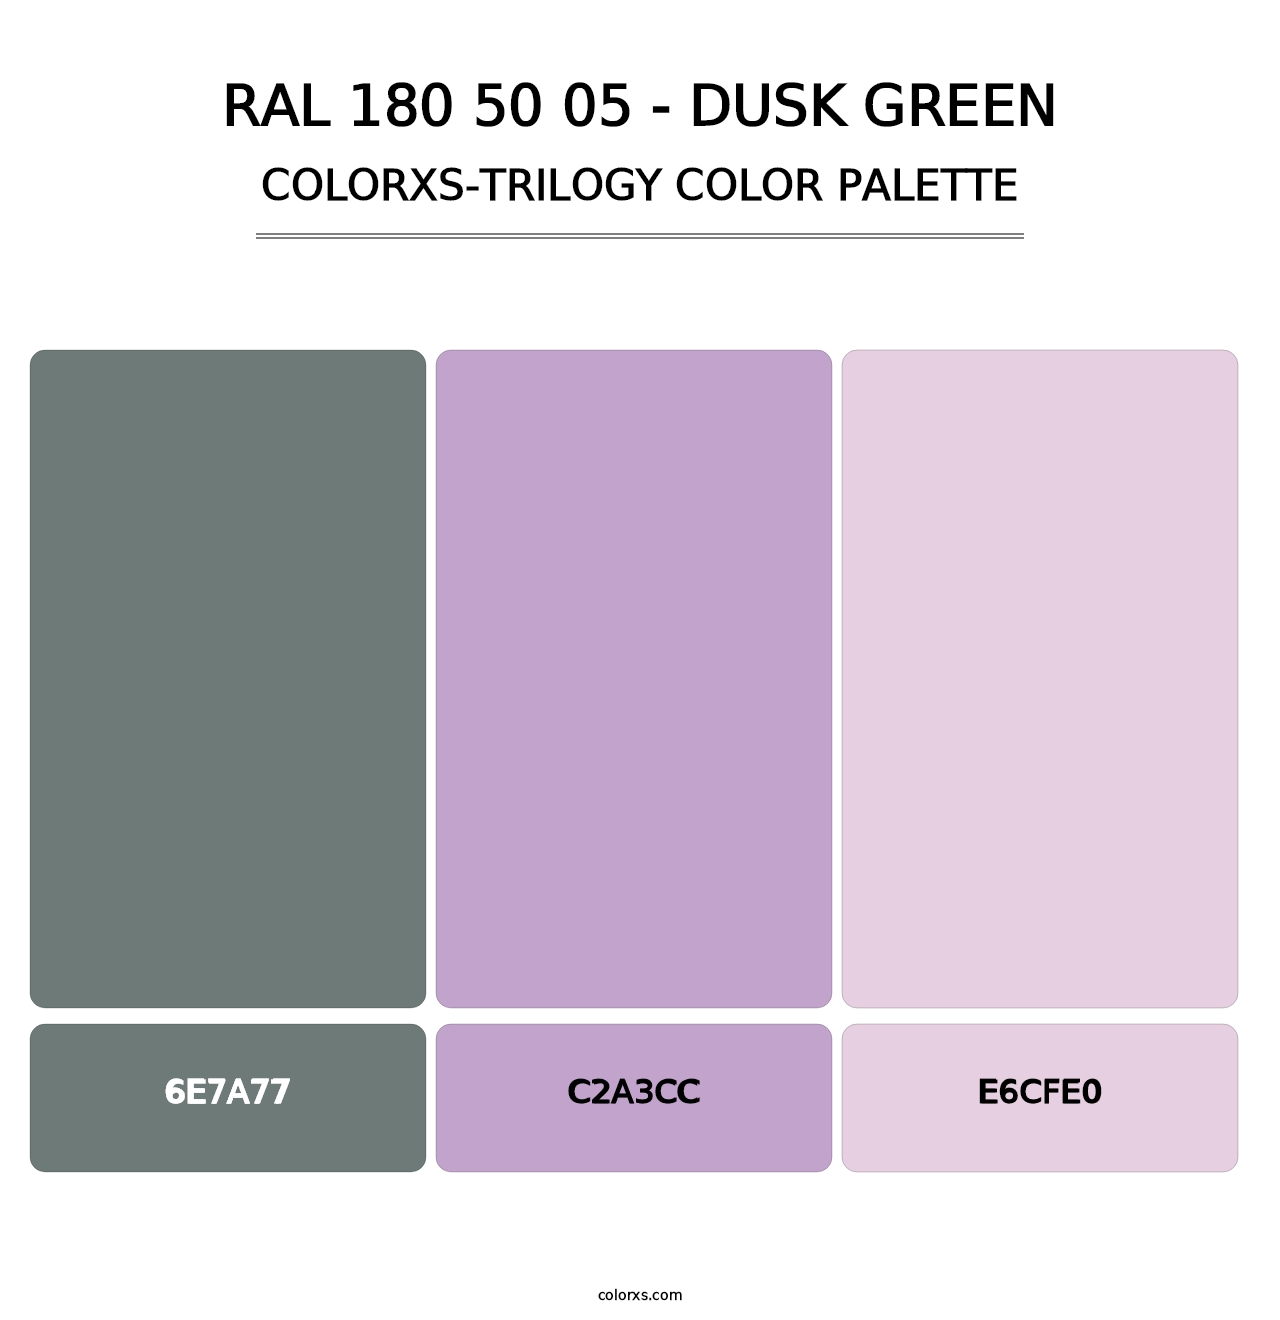 RAL 180 50 05 - Dusk Green - Colorxs Trilogy Palette